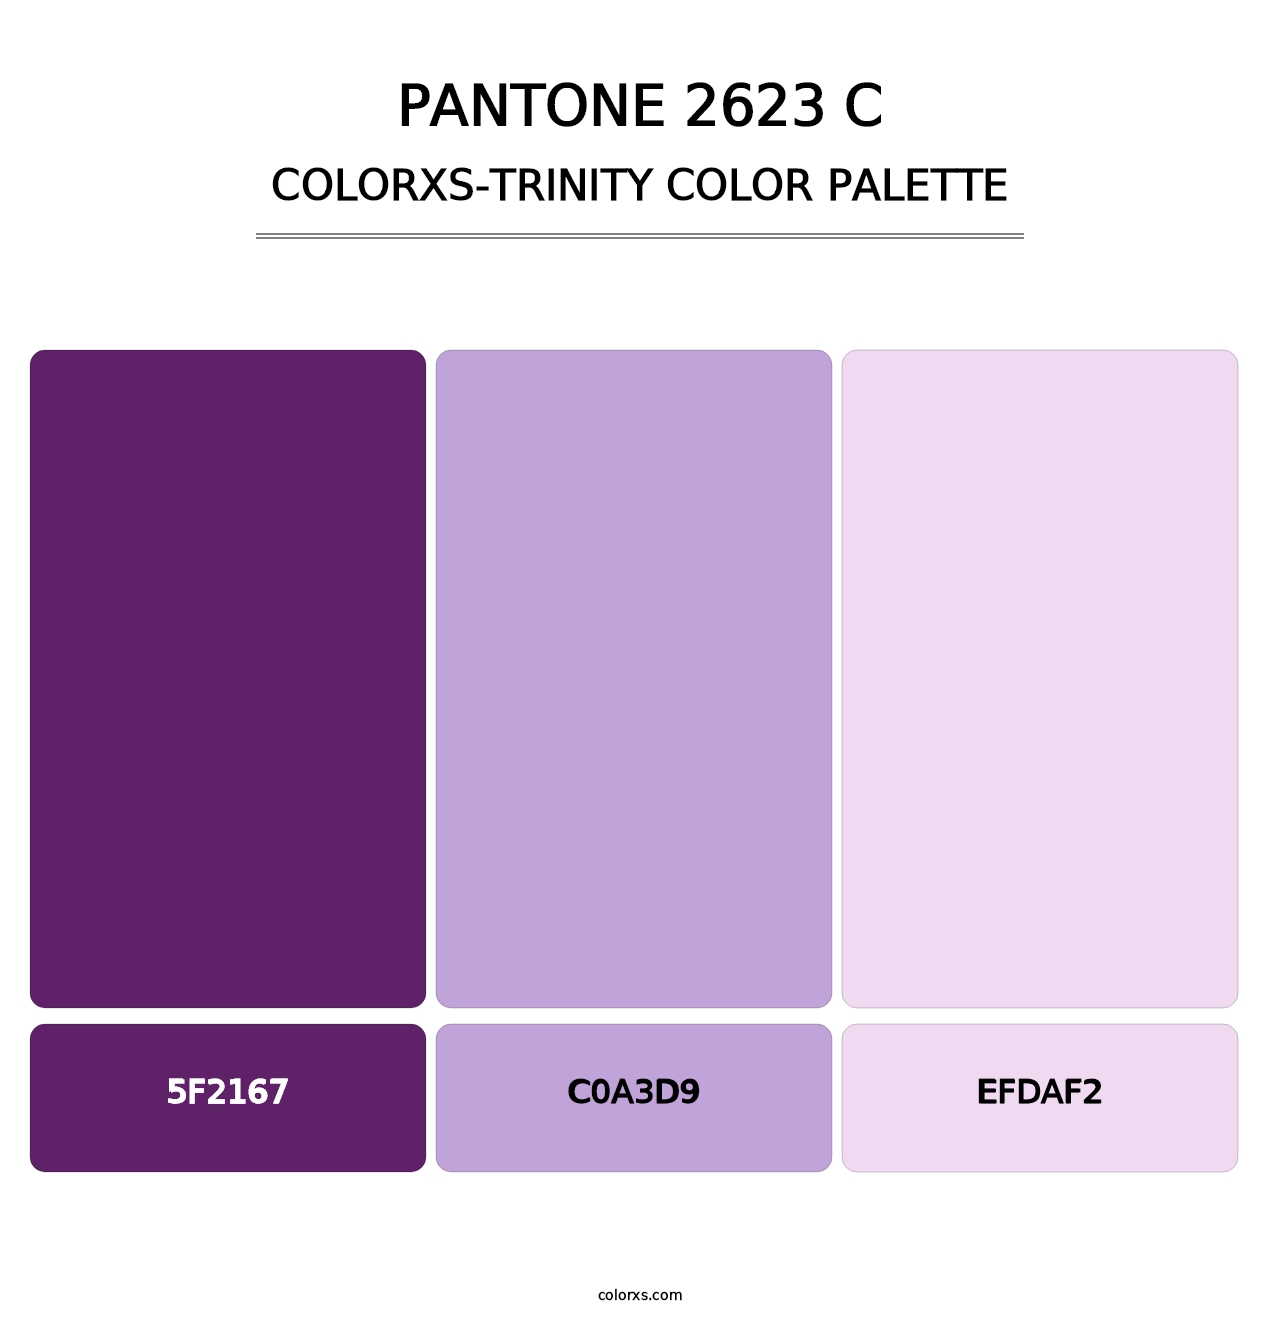 PANTONE 2623 C - Colorxs Trinity Palette